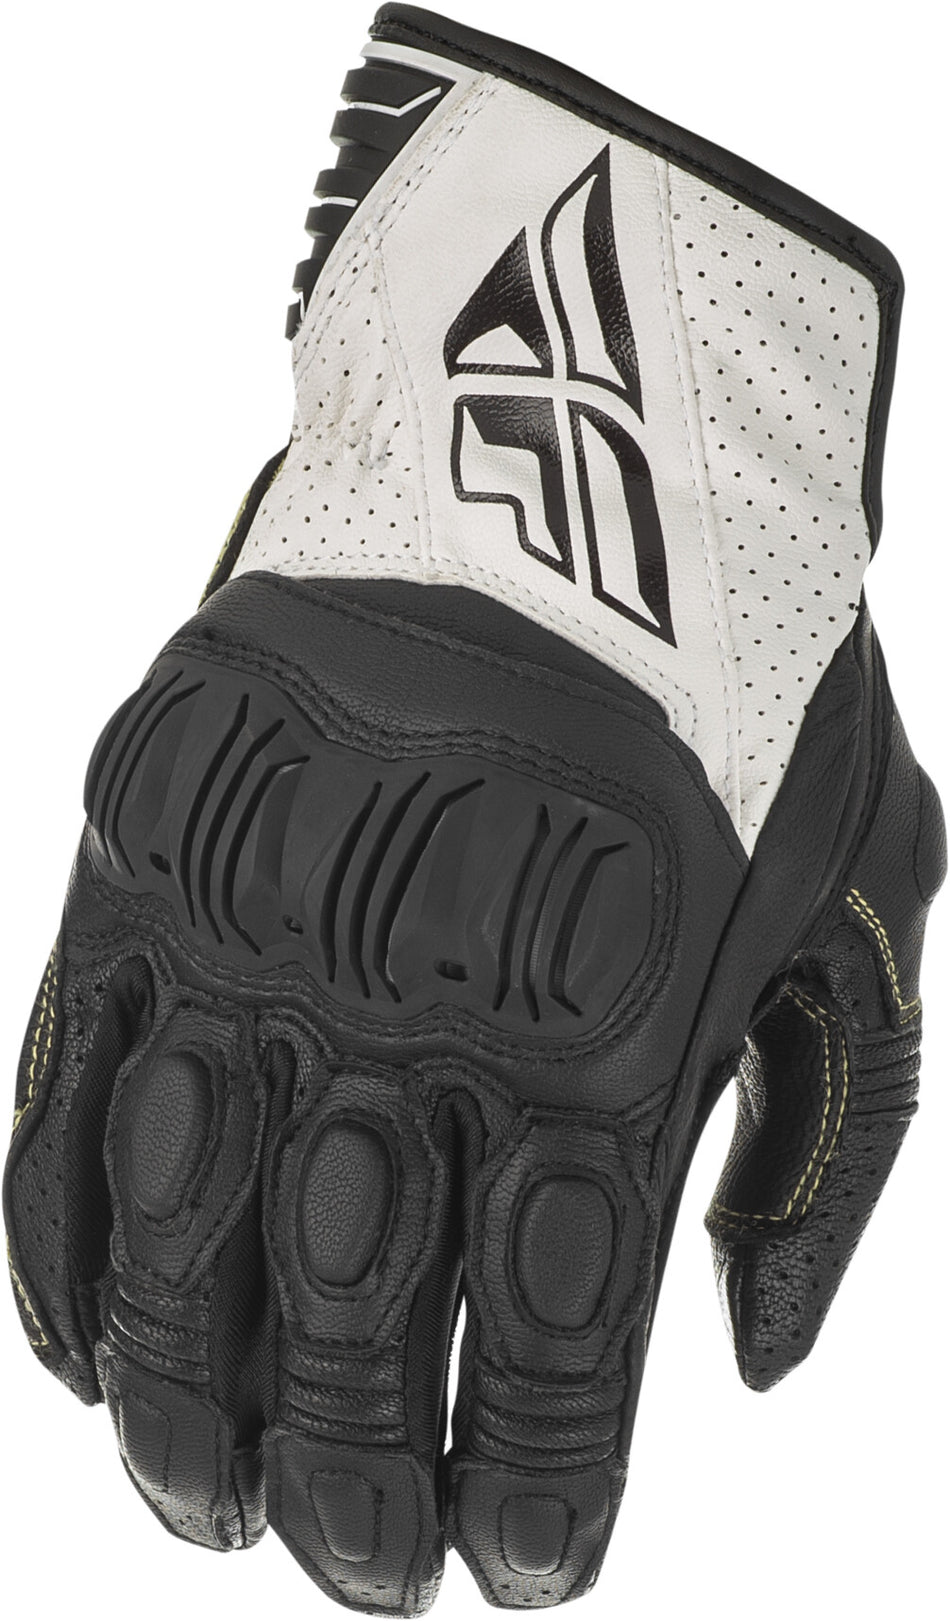 FLY RACING Brawler Gloves Black/White Lg 476-2093L